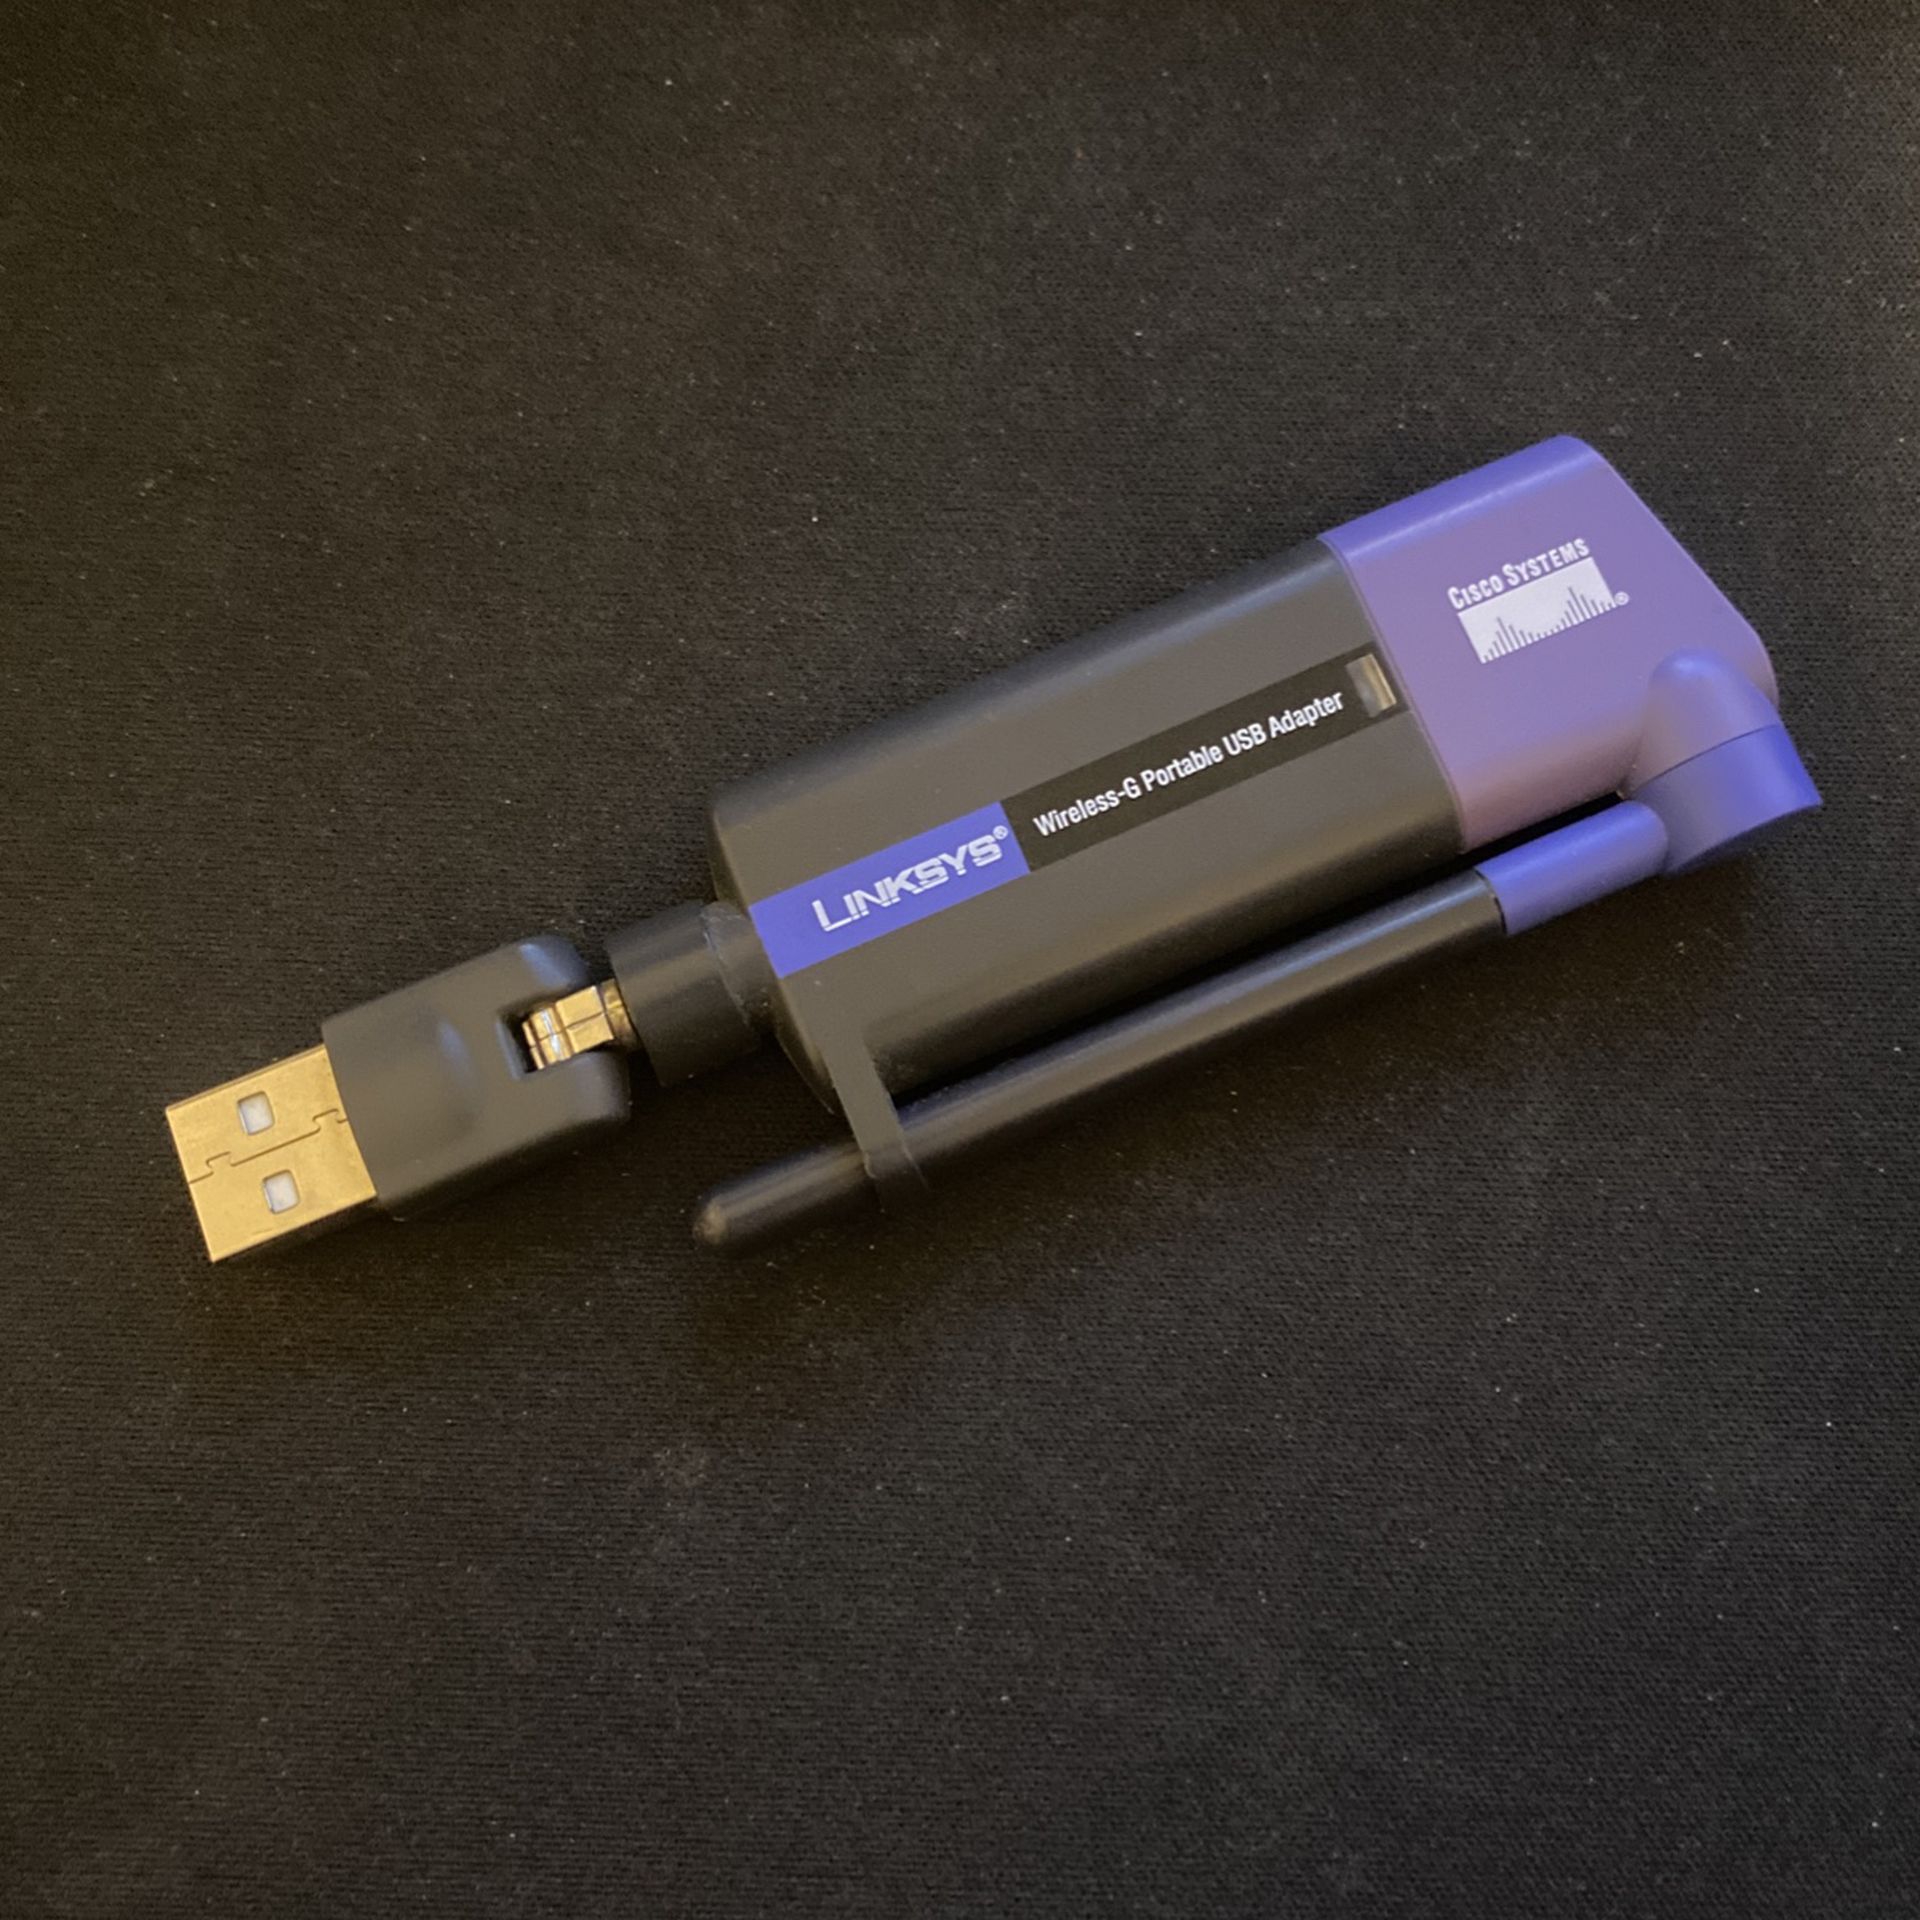 Linksys Cisco WUSB54GP ver. 4 Wireless-G Portable USB Adapter